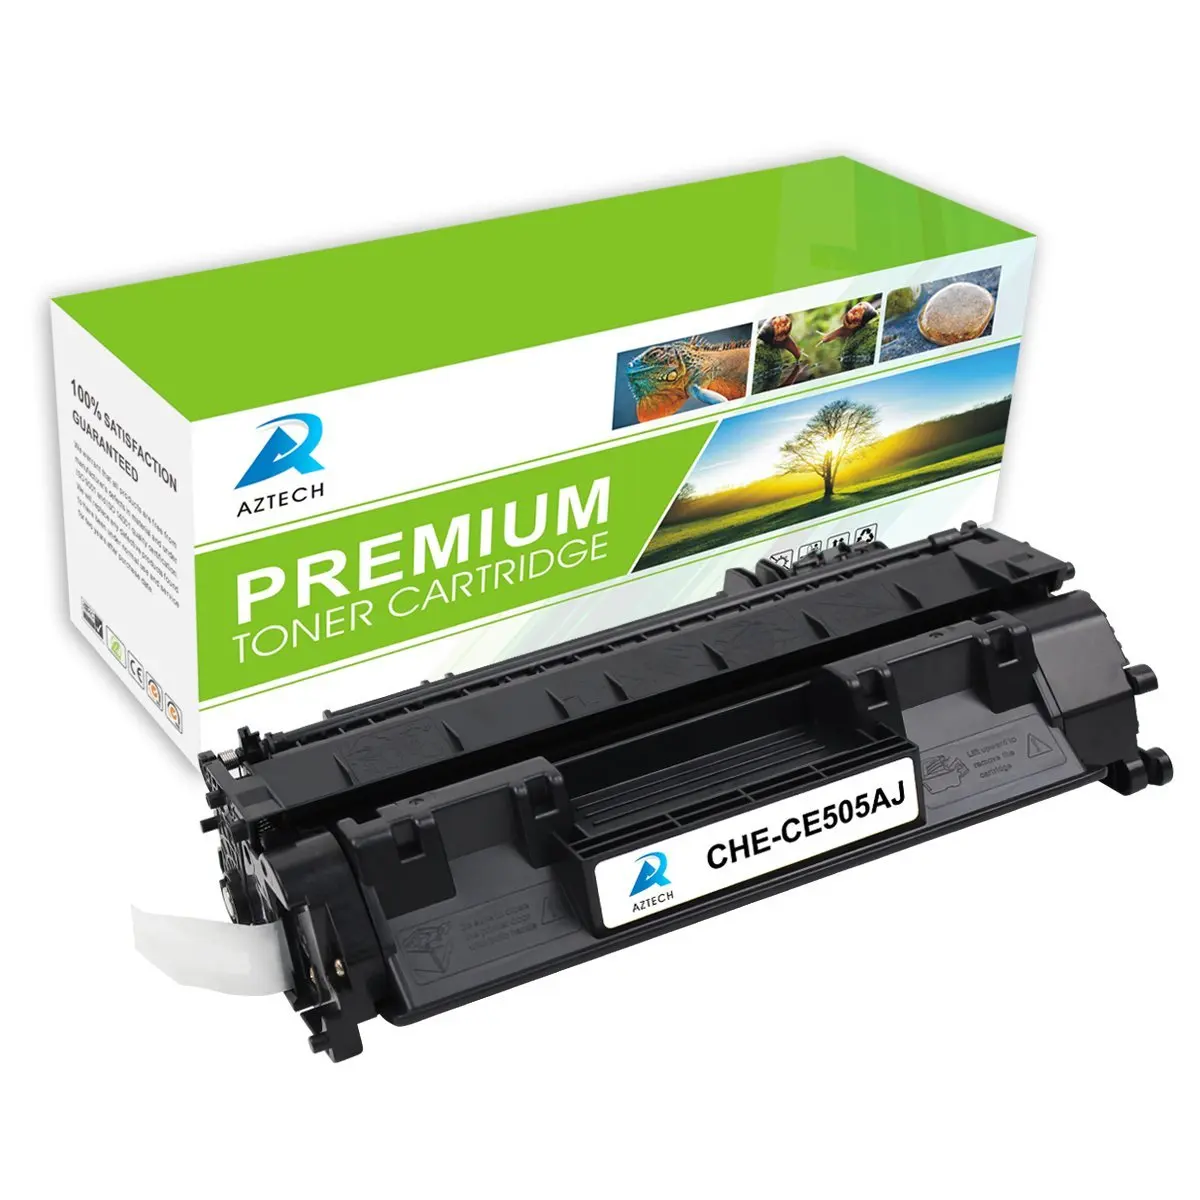 hp p2055dn printer cartridge